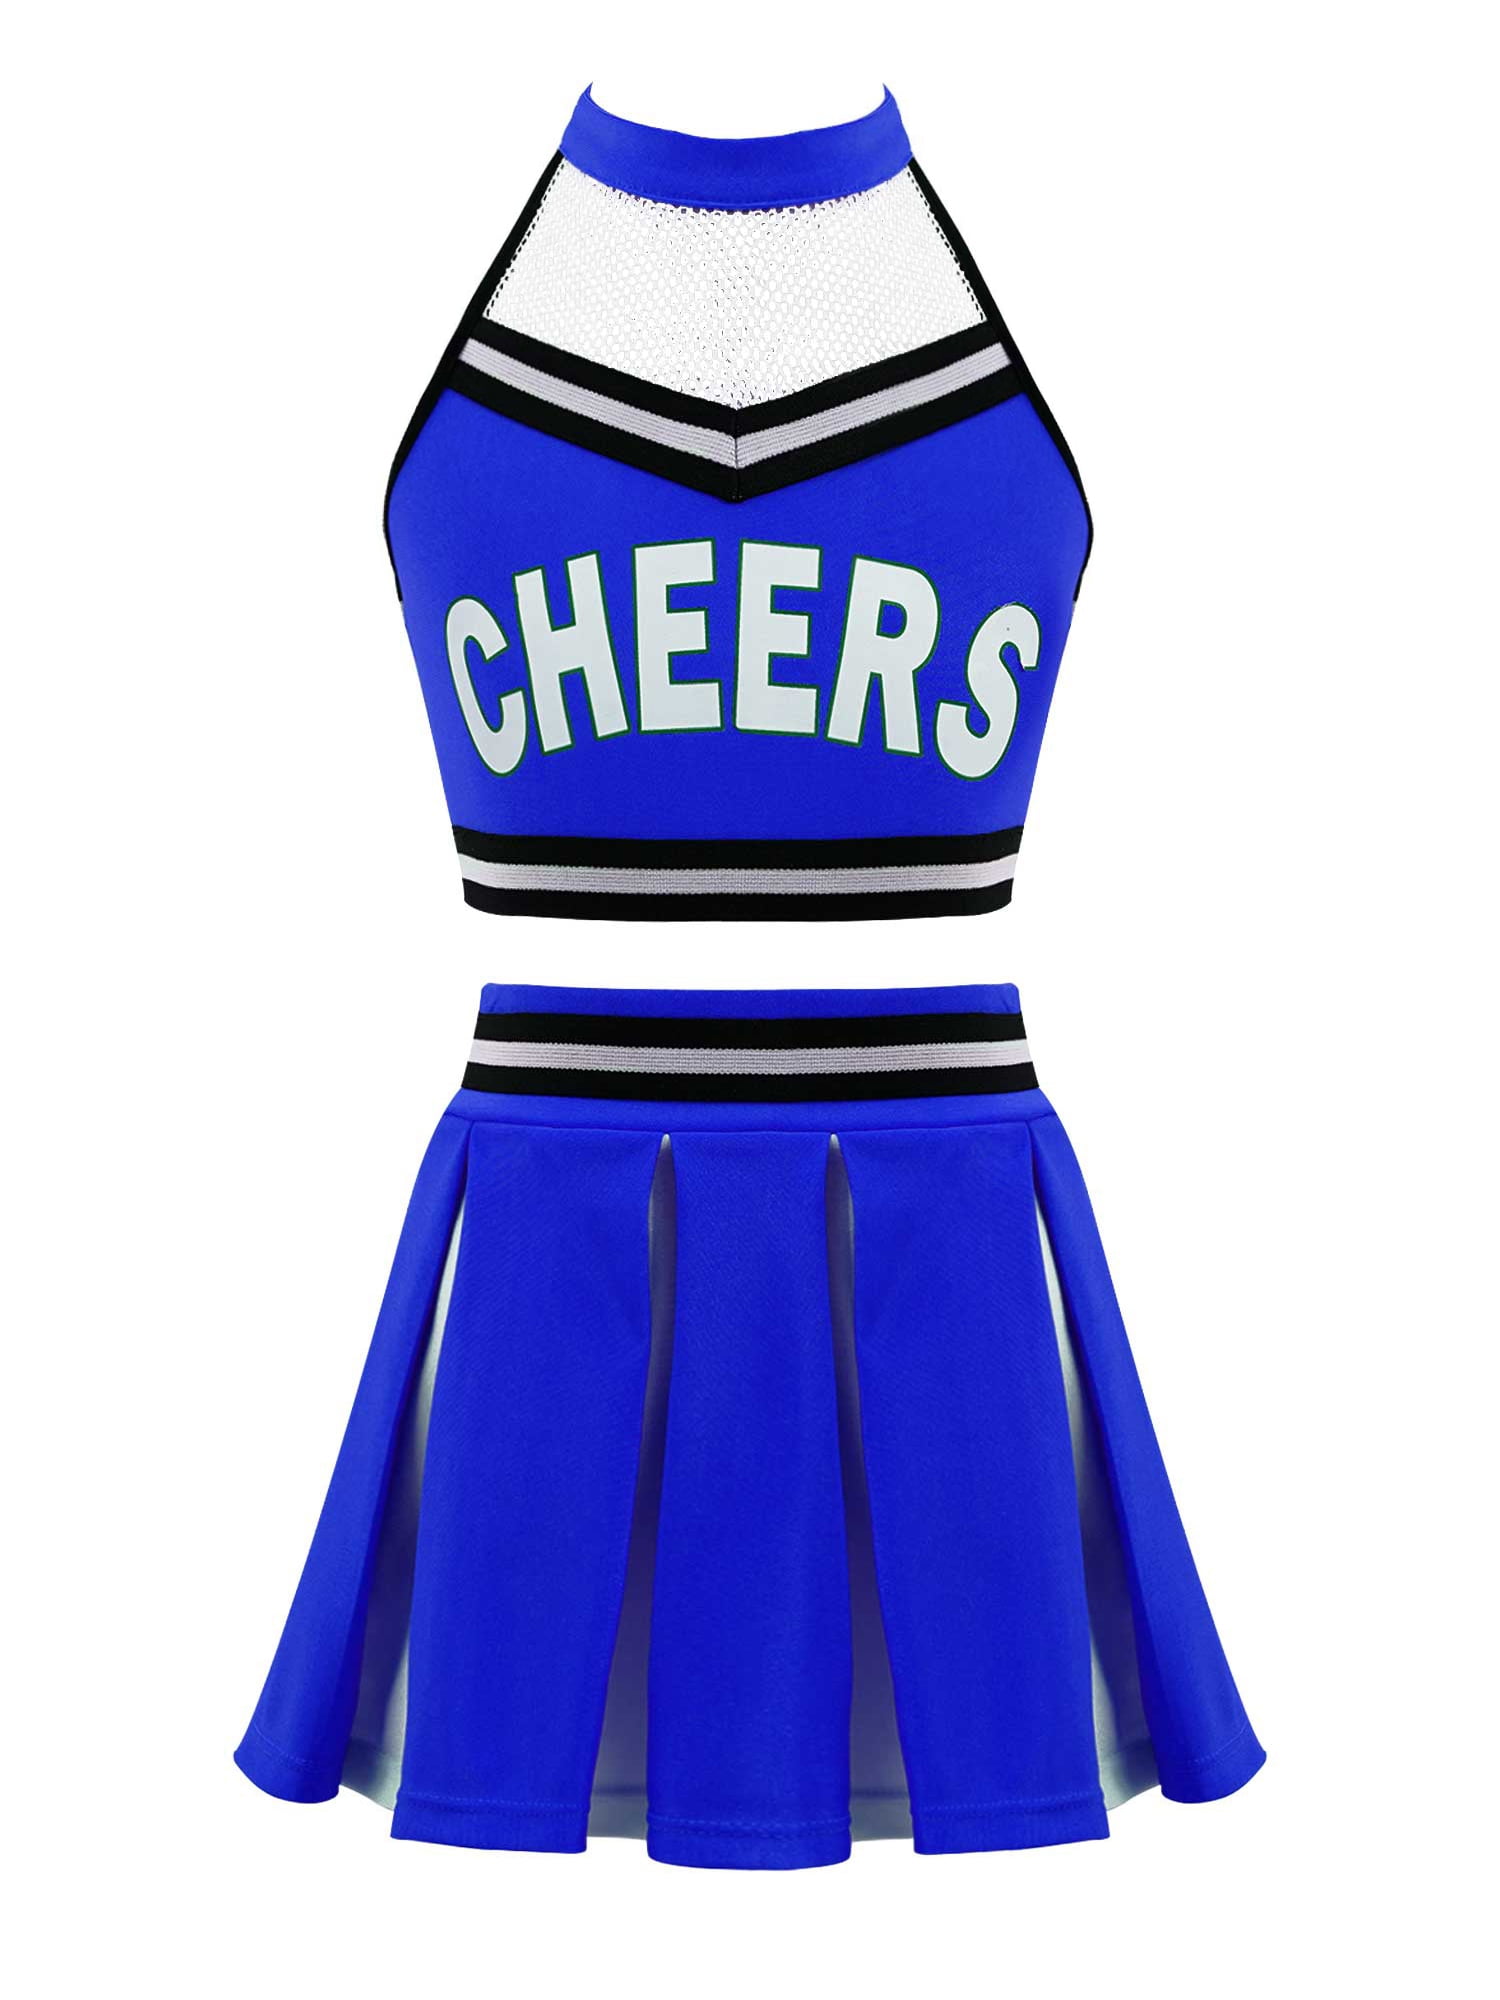 DPOIS Girls Cheer Uniform Cheerleader Outfit Cheerleading Uniform